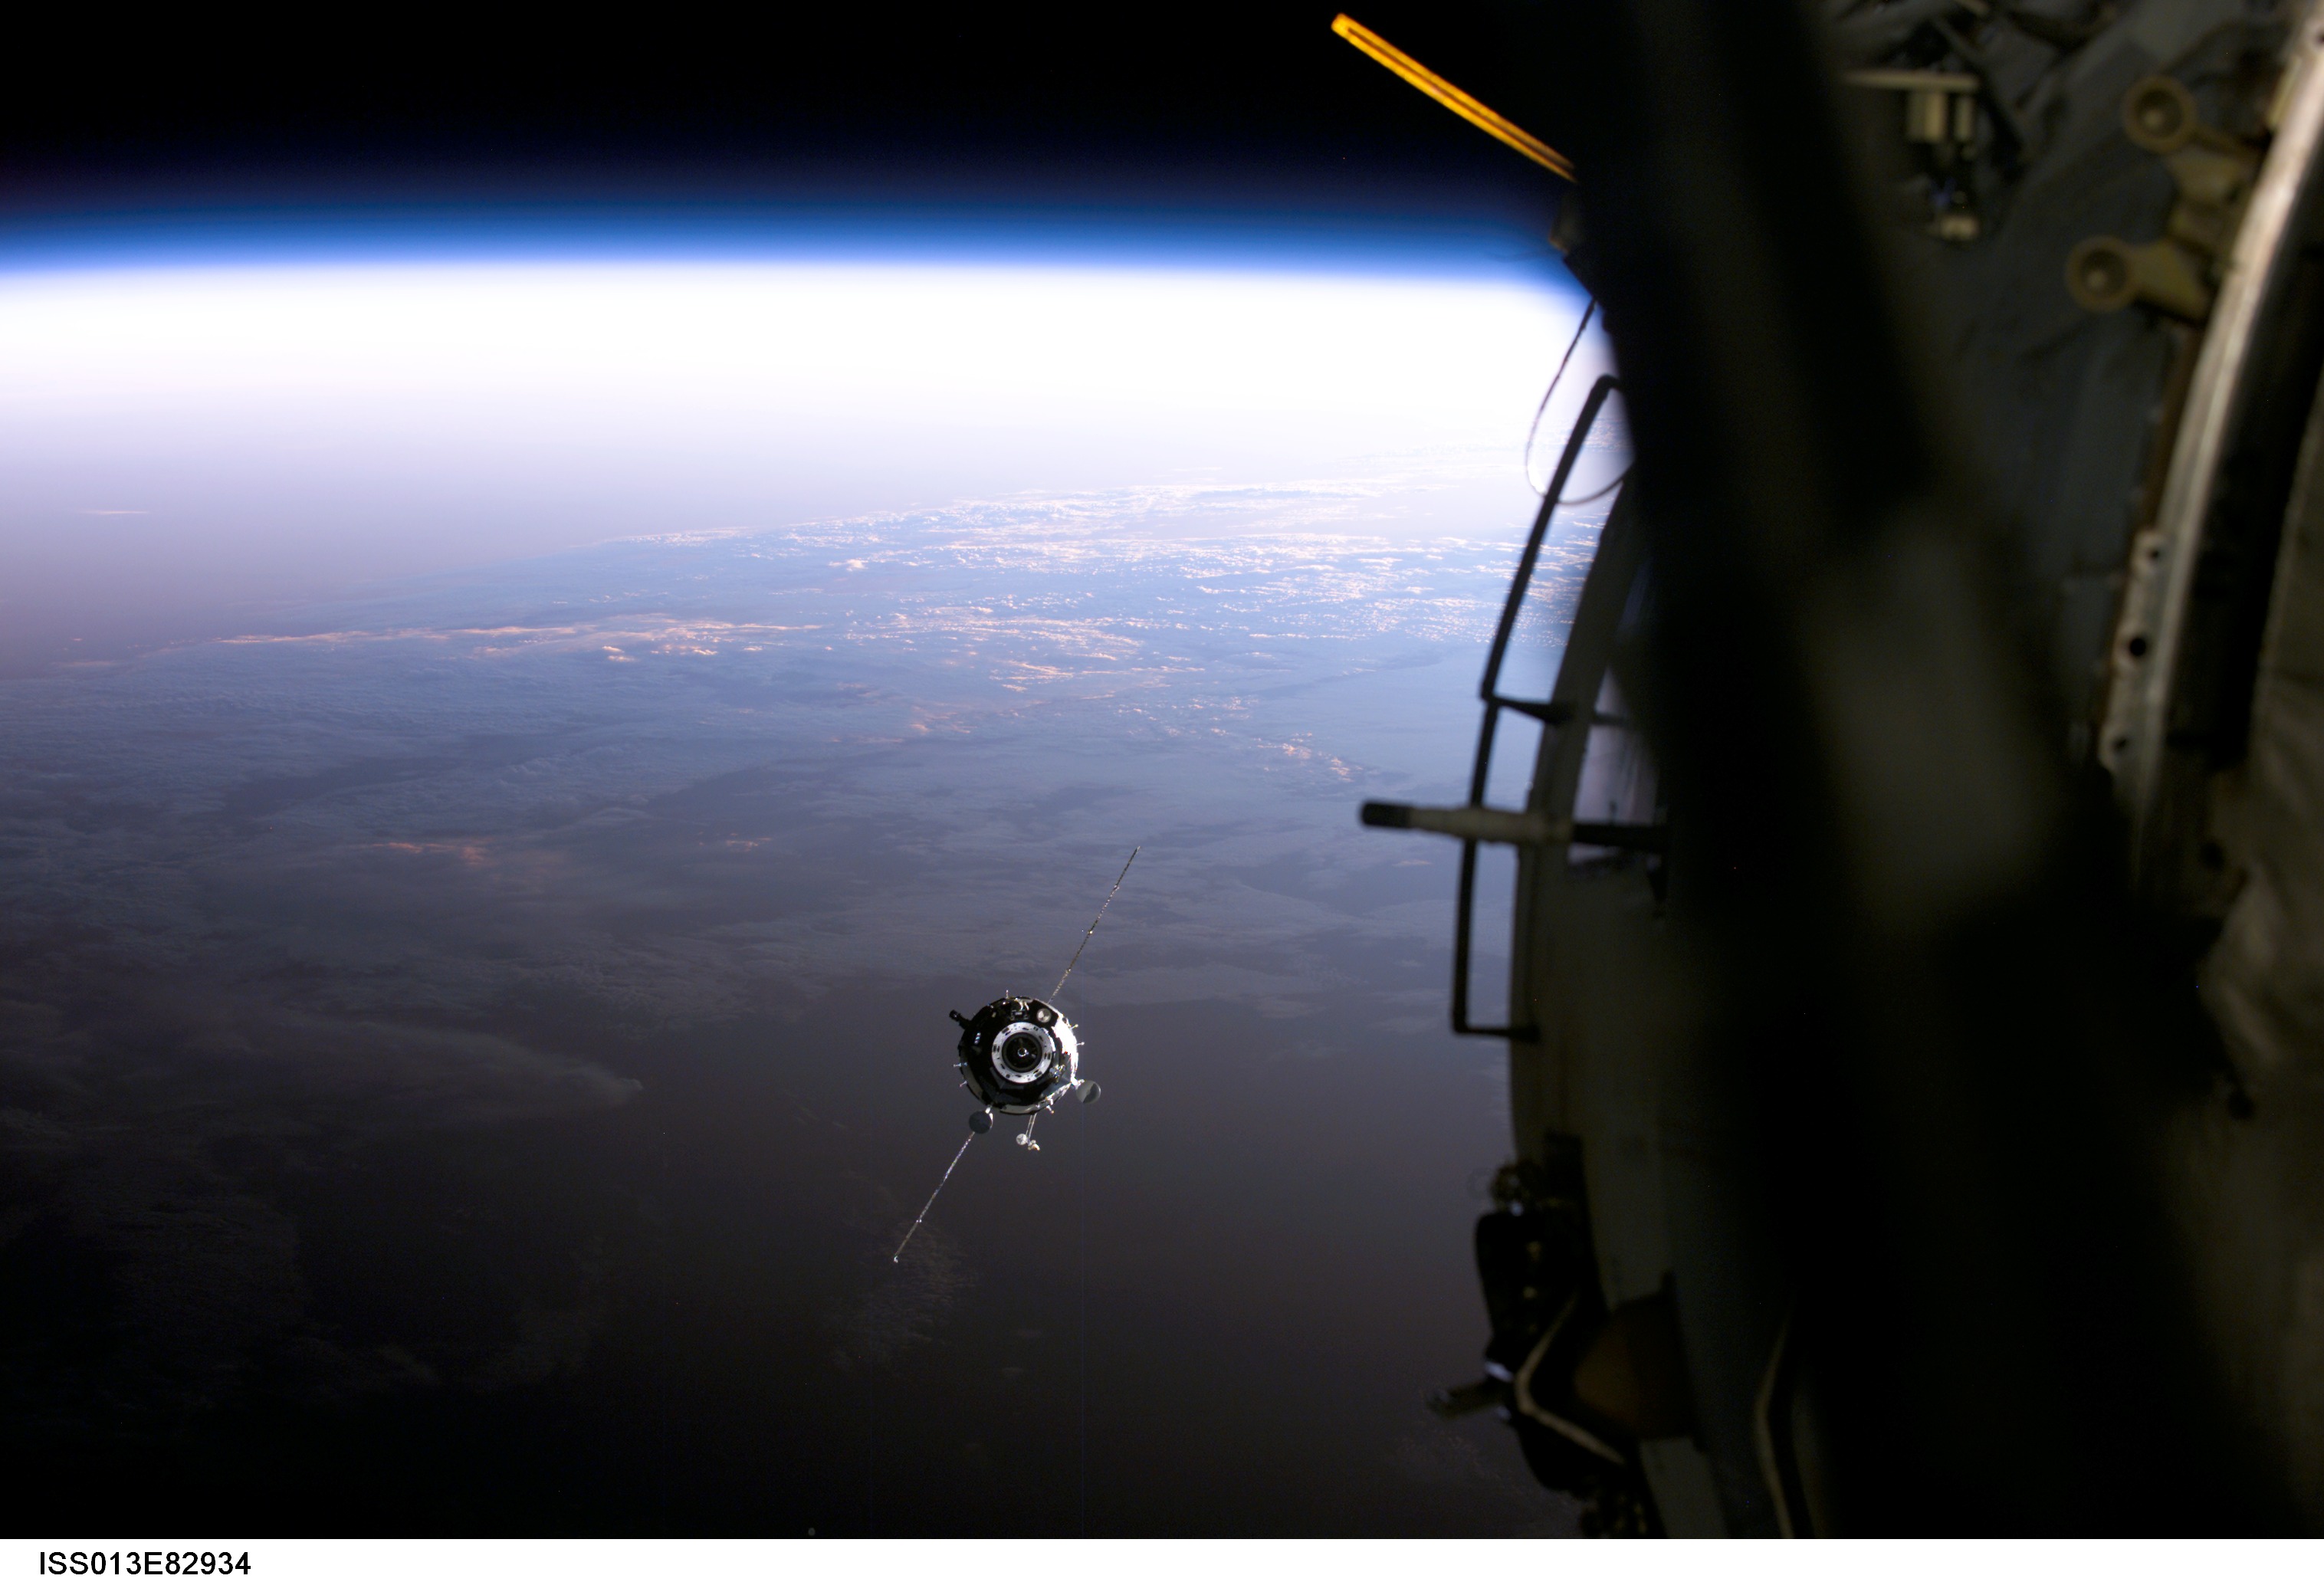 NASA space shuttle launching into deep space.